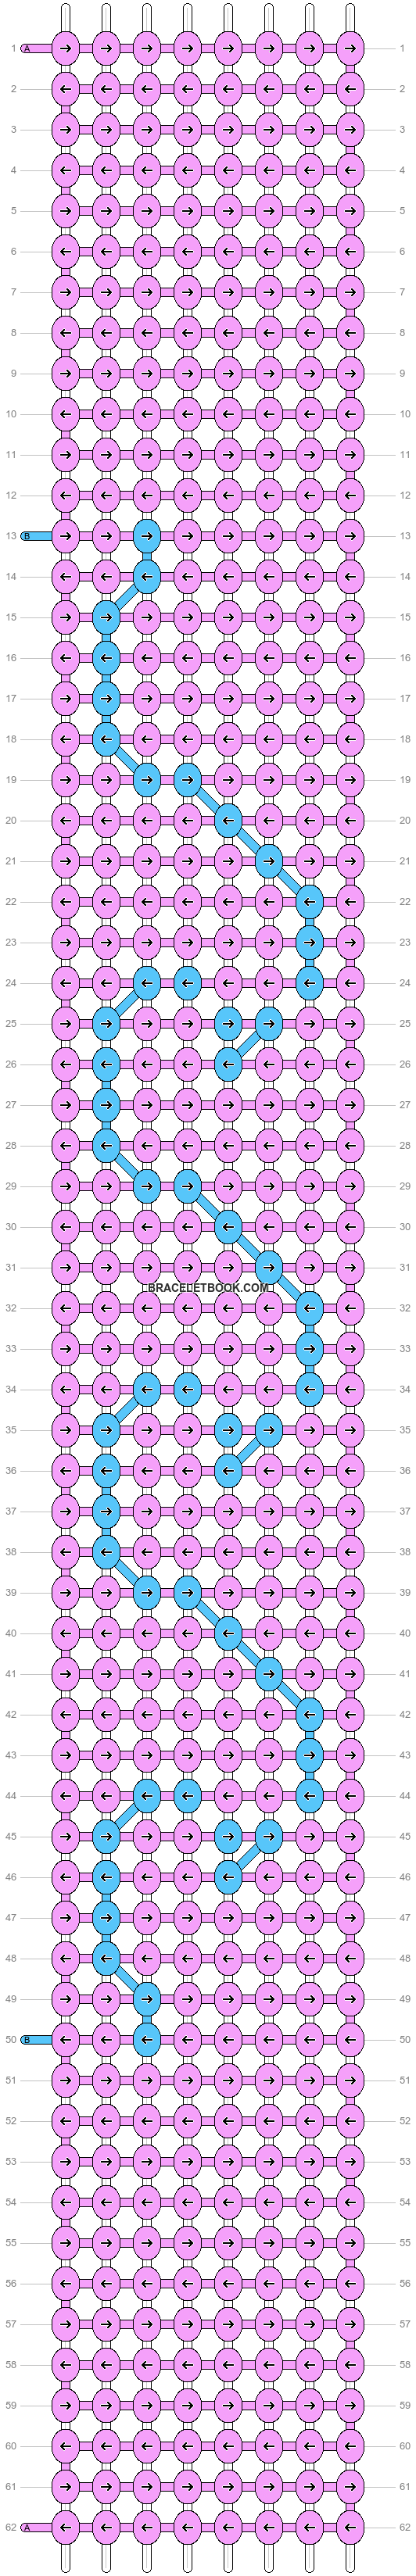 Alpha pattern #63257 variation #133747 pattern